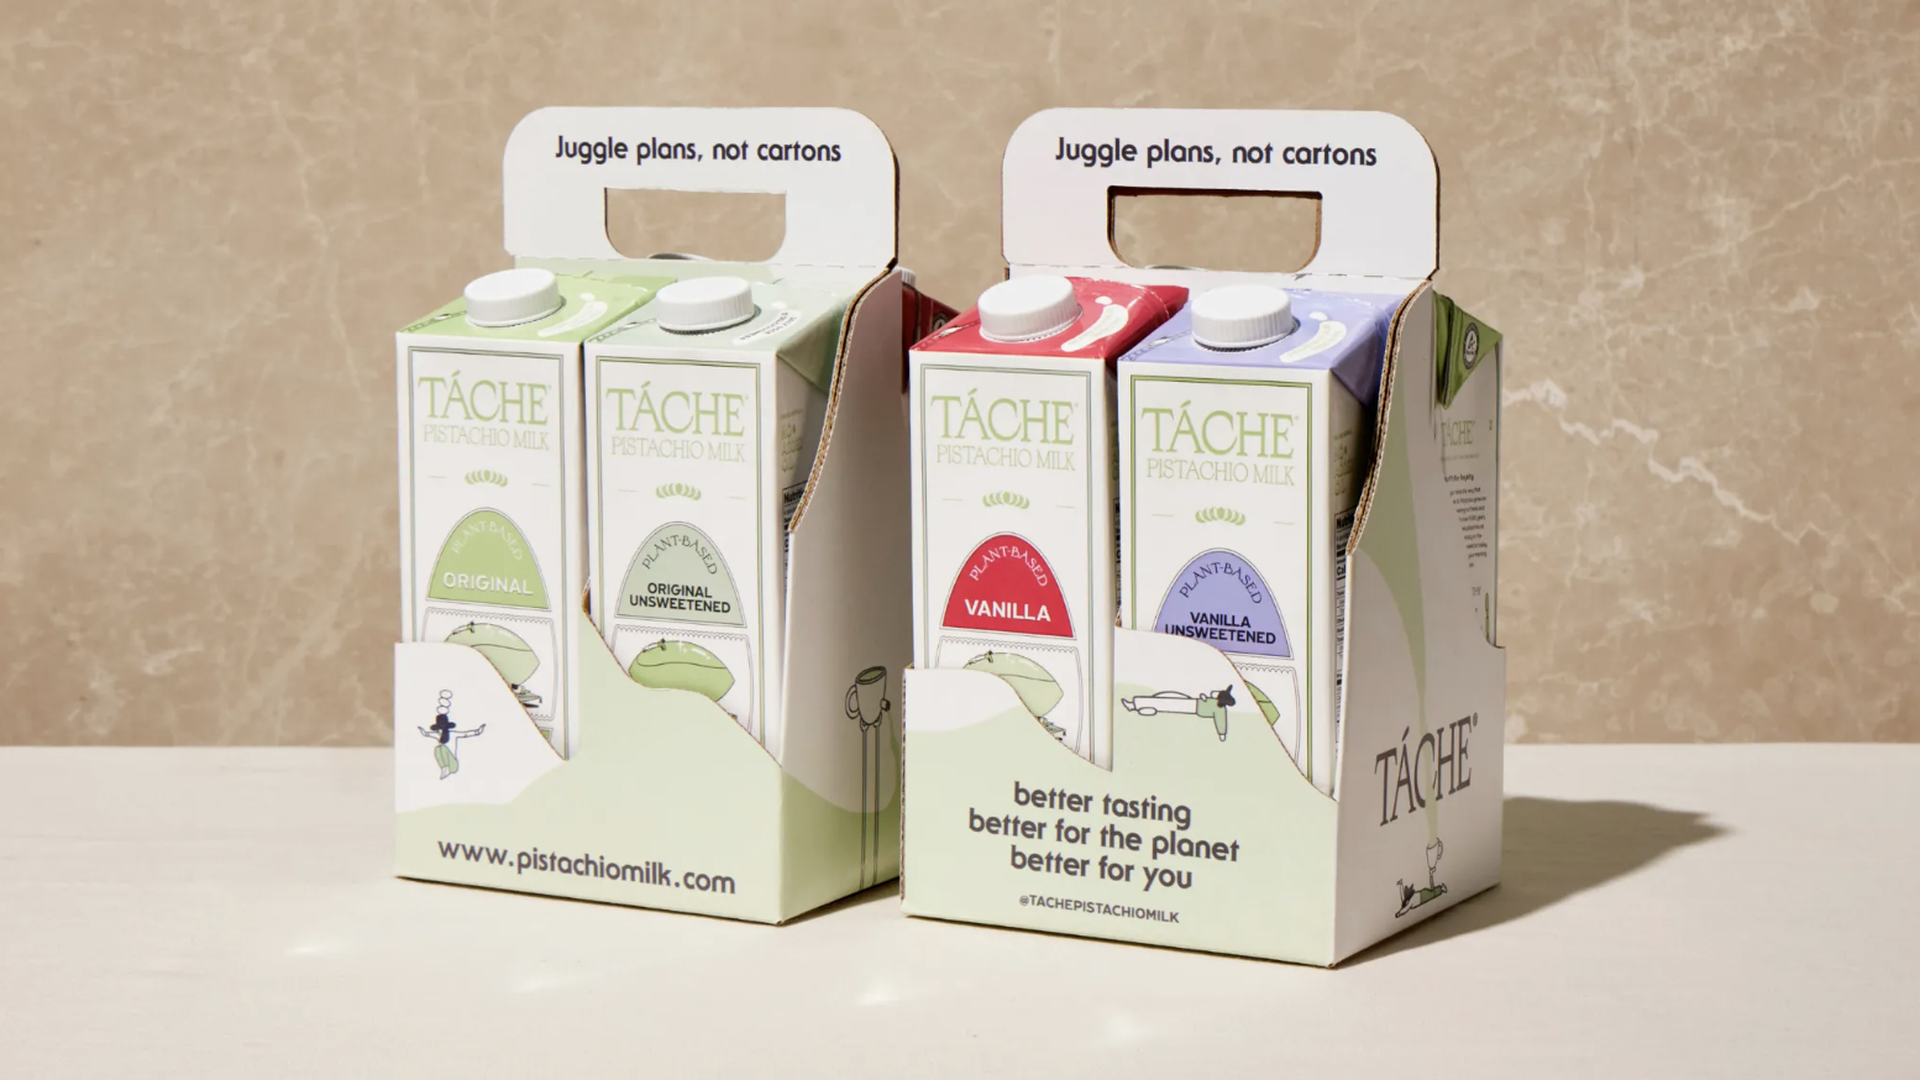 Táche pistachio milk comes in attractive cartons. Photo courtesy of Táche